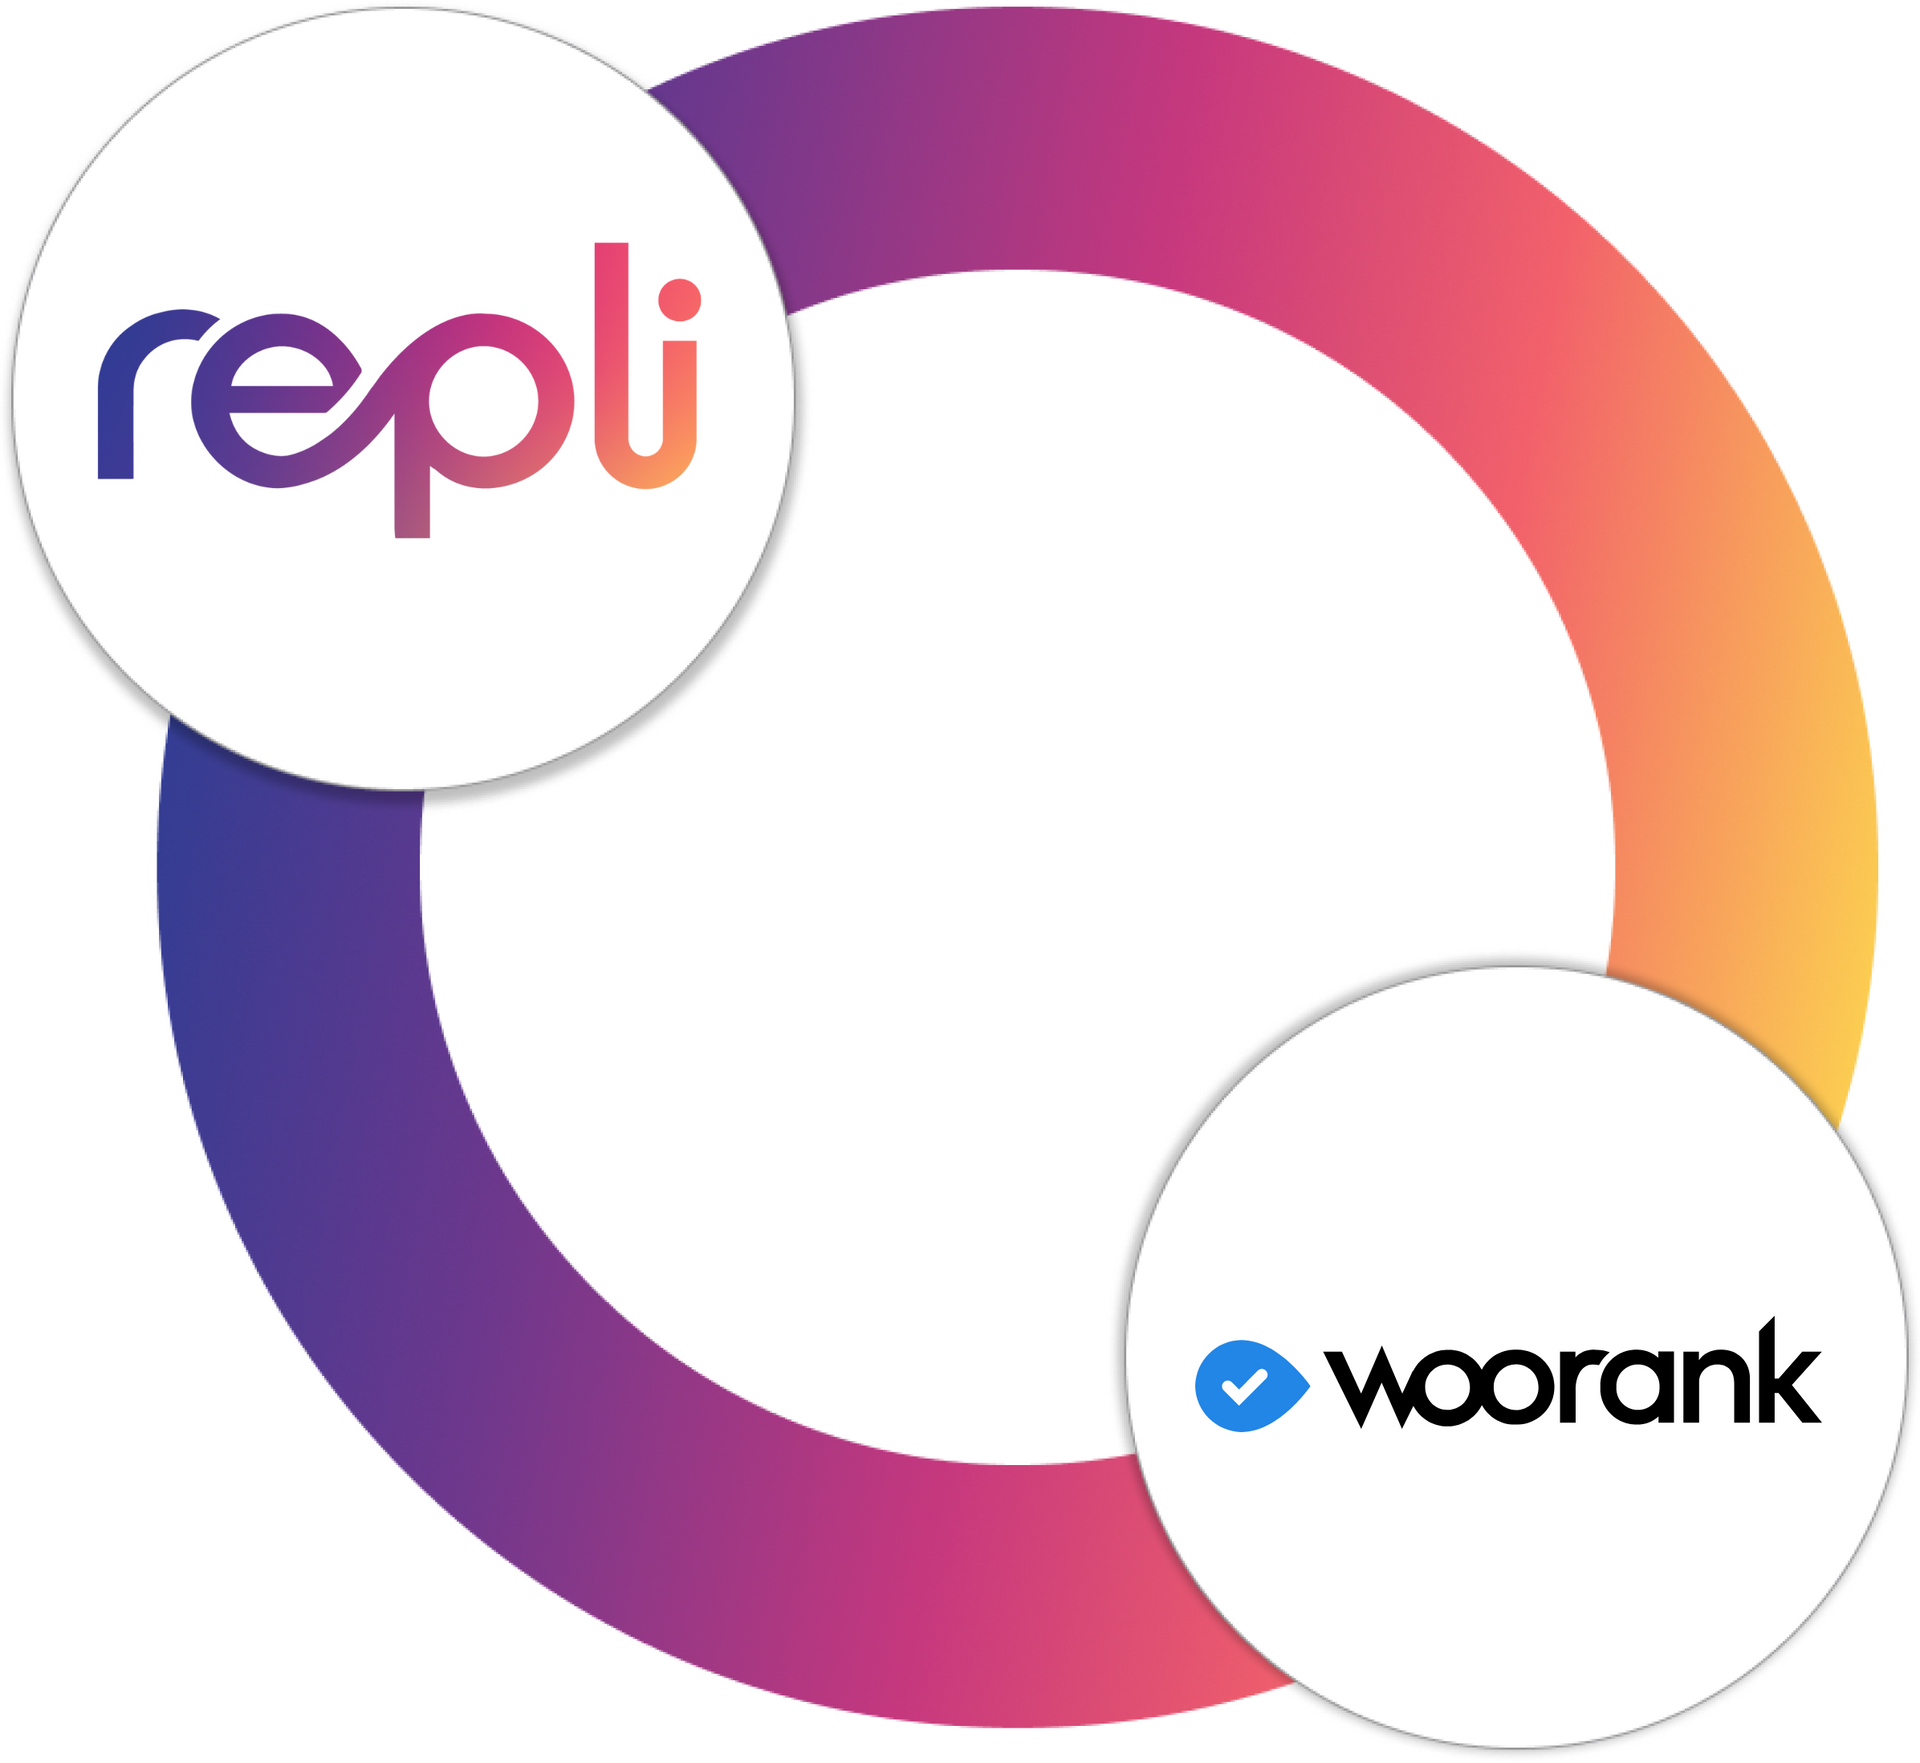 A logo for a company called repli and elise ai